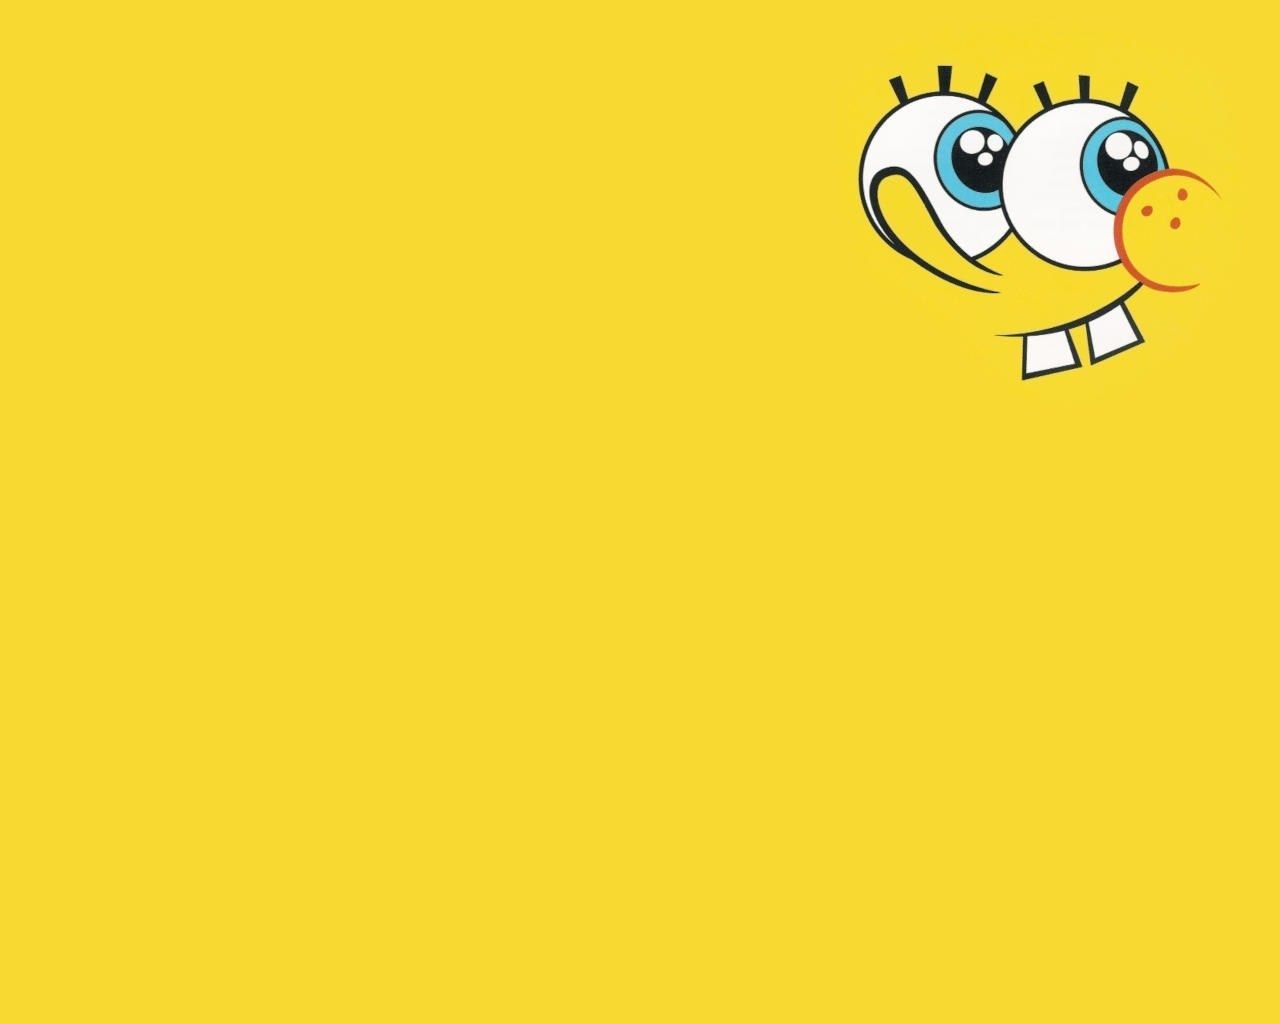 Best 500 screensaver: Spongebob screensaver wallpaper